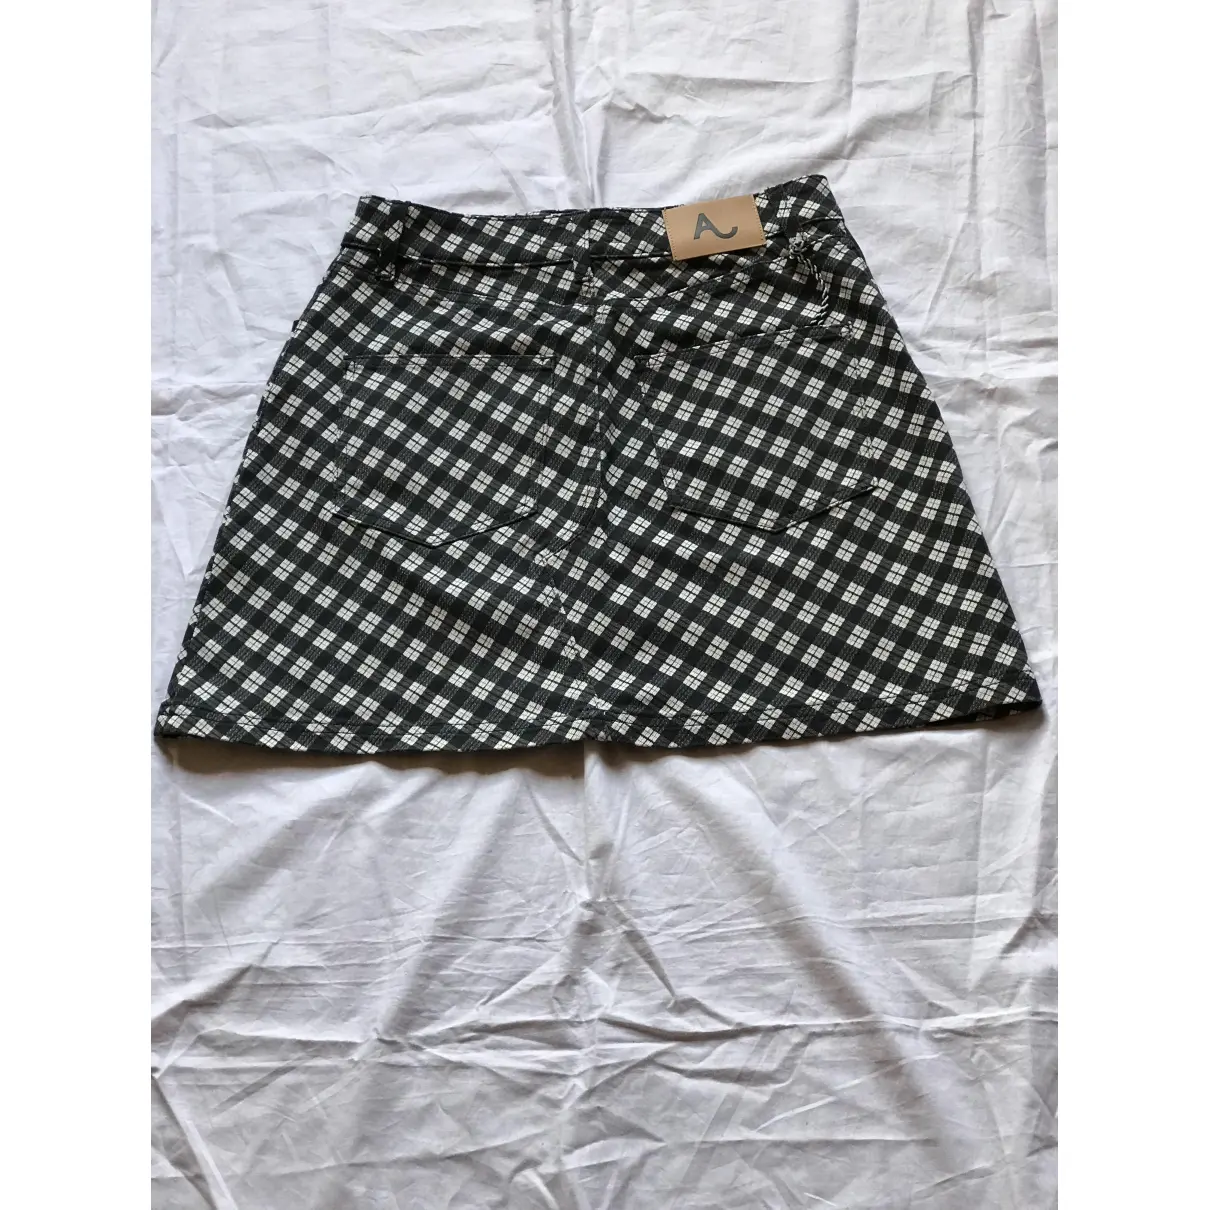 Buy Alexa Chung Mini skirt online